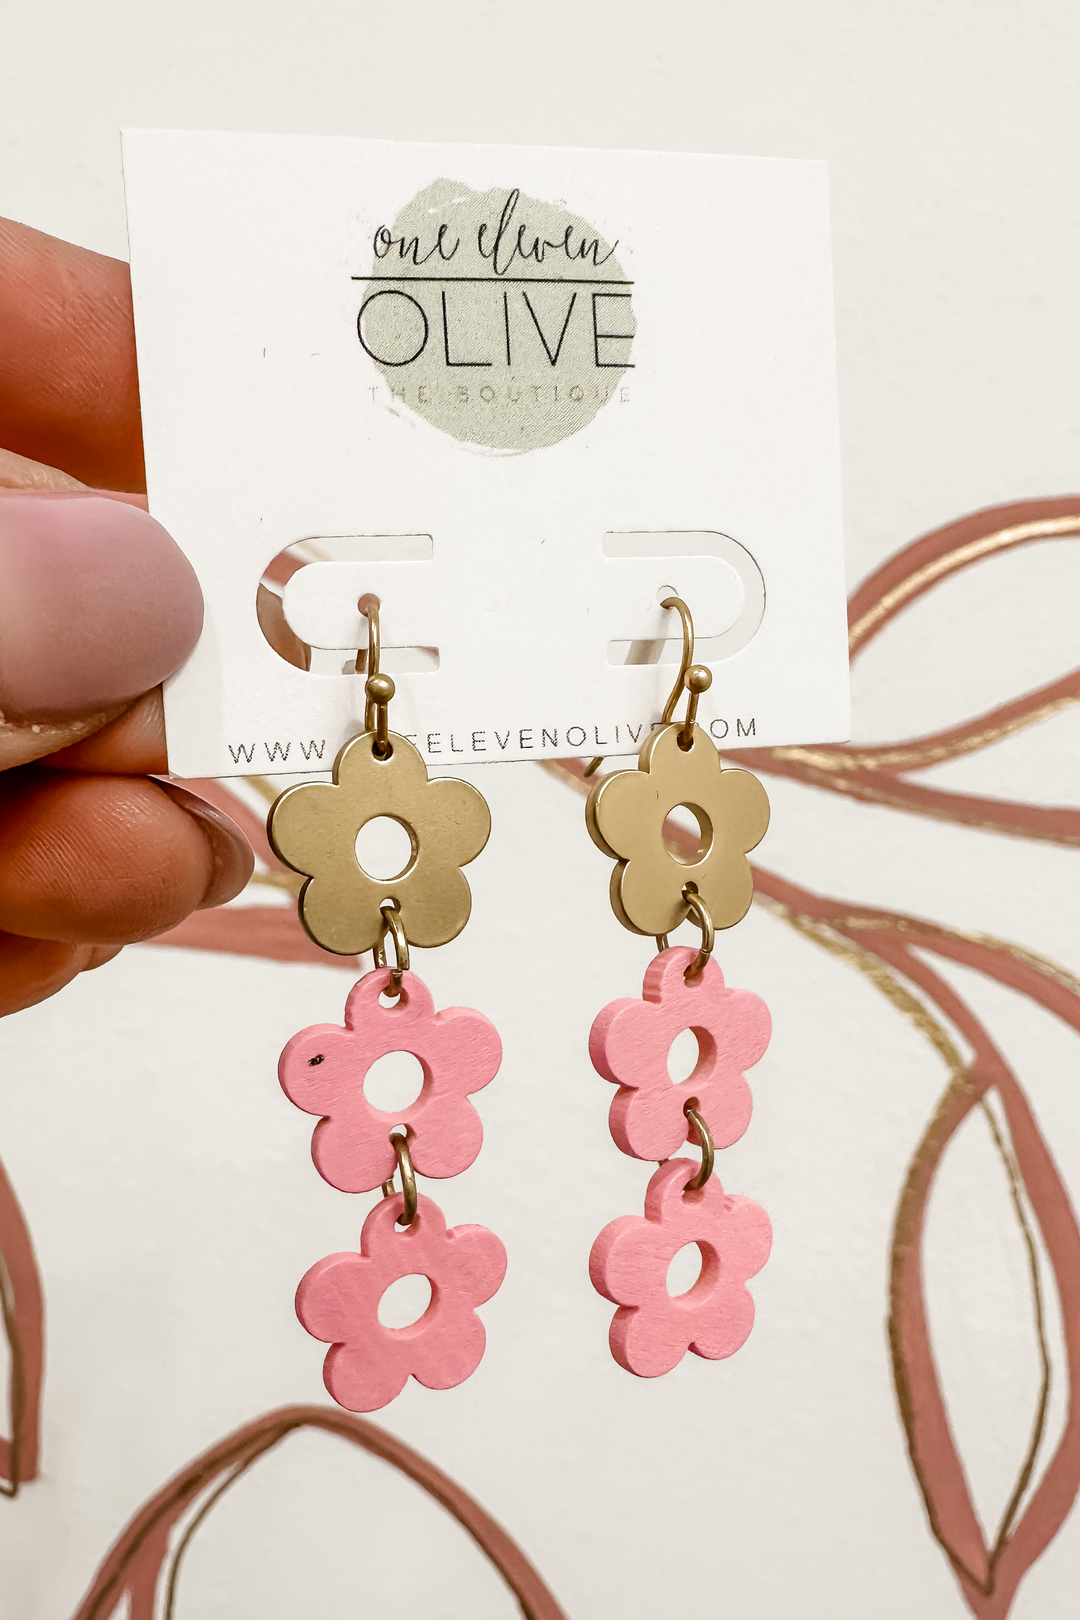 The Gold & Pink Flower Earrings